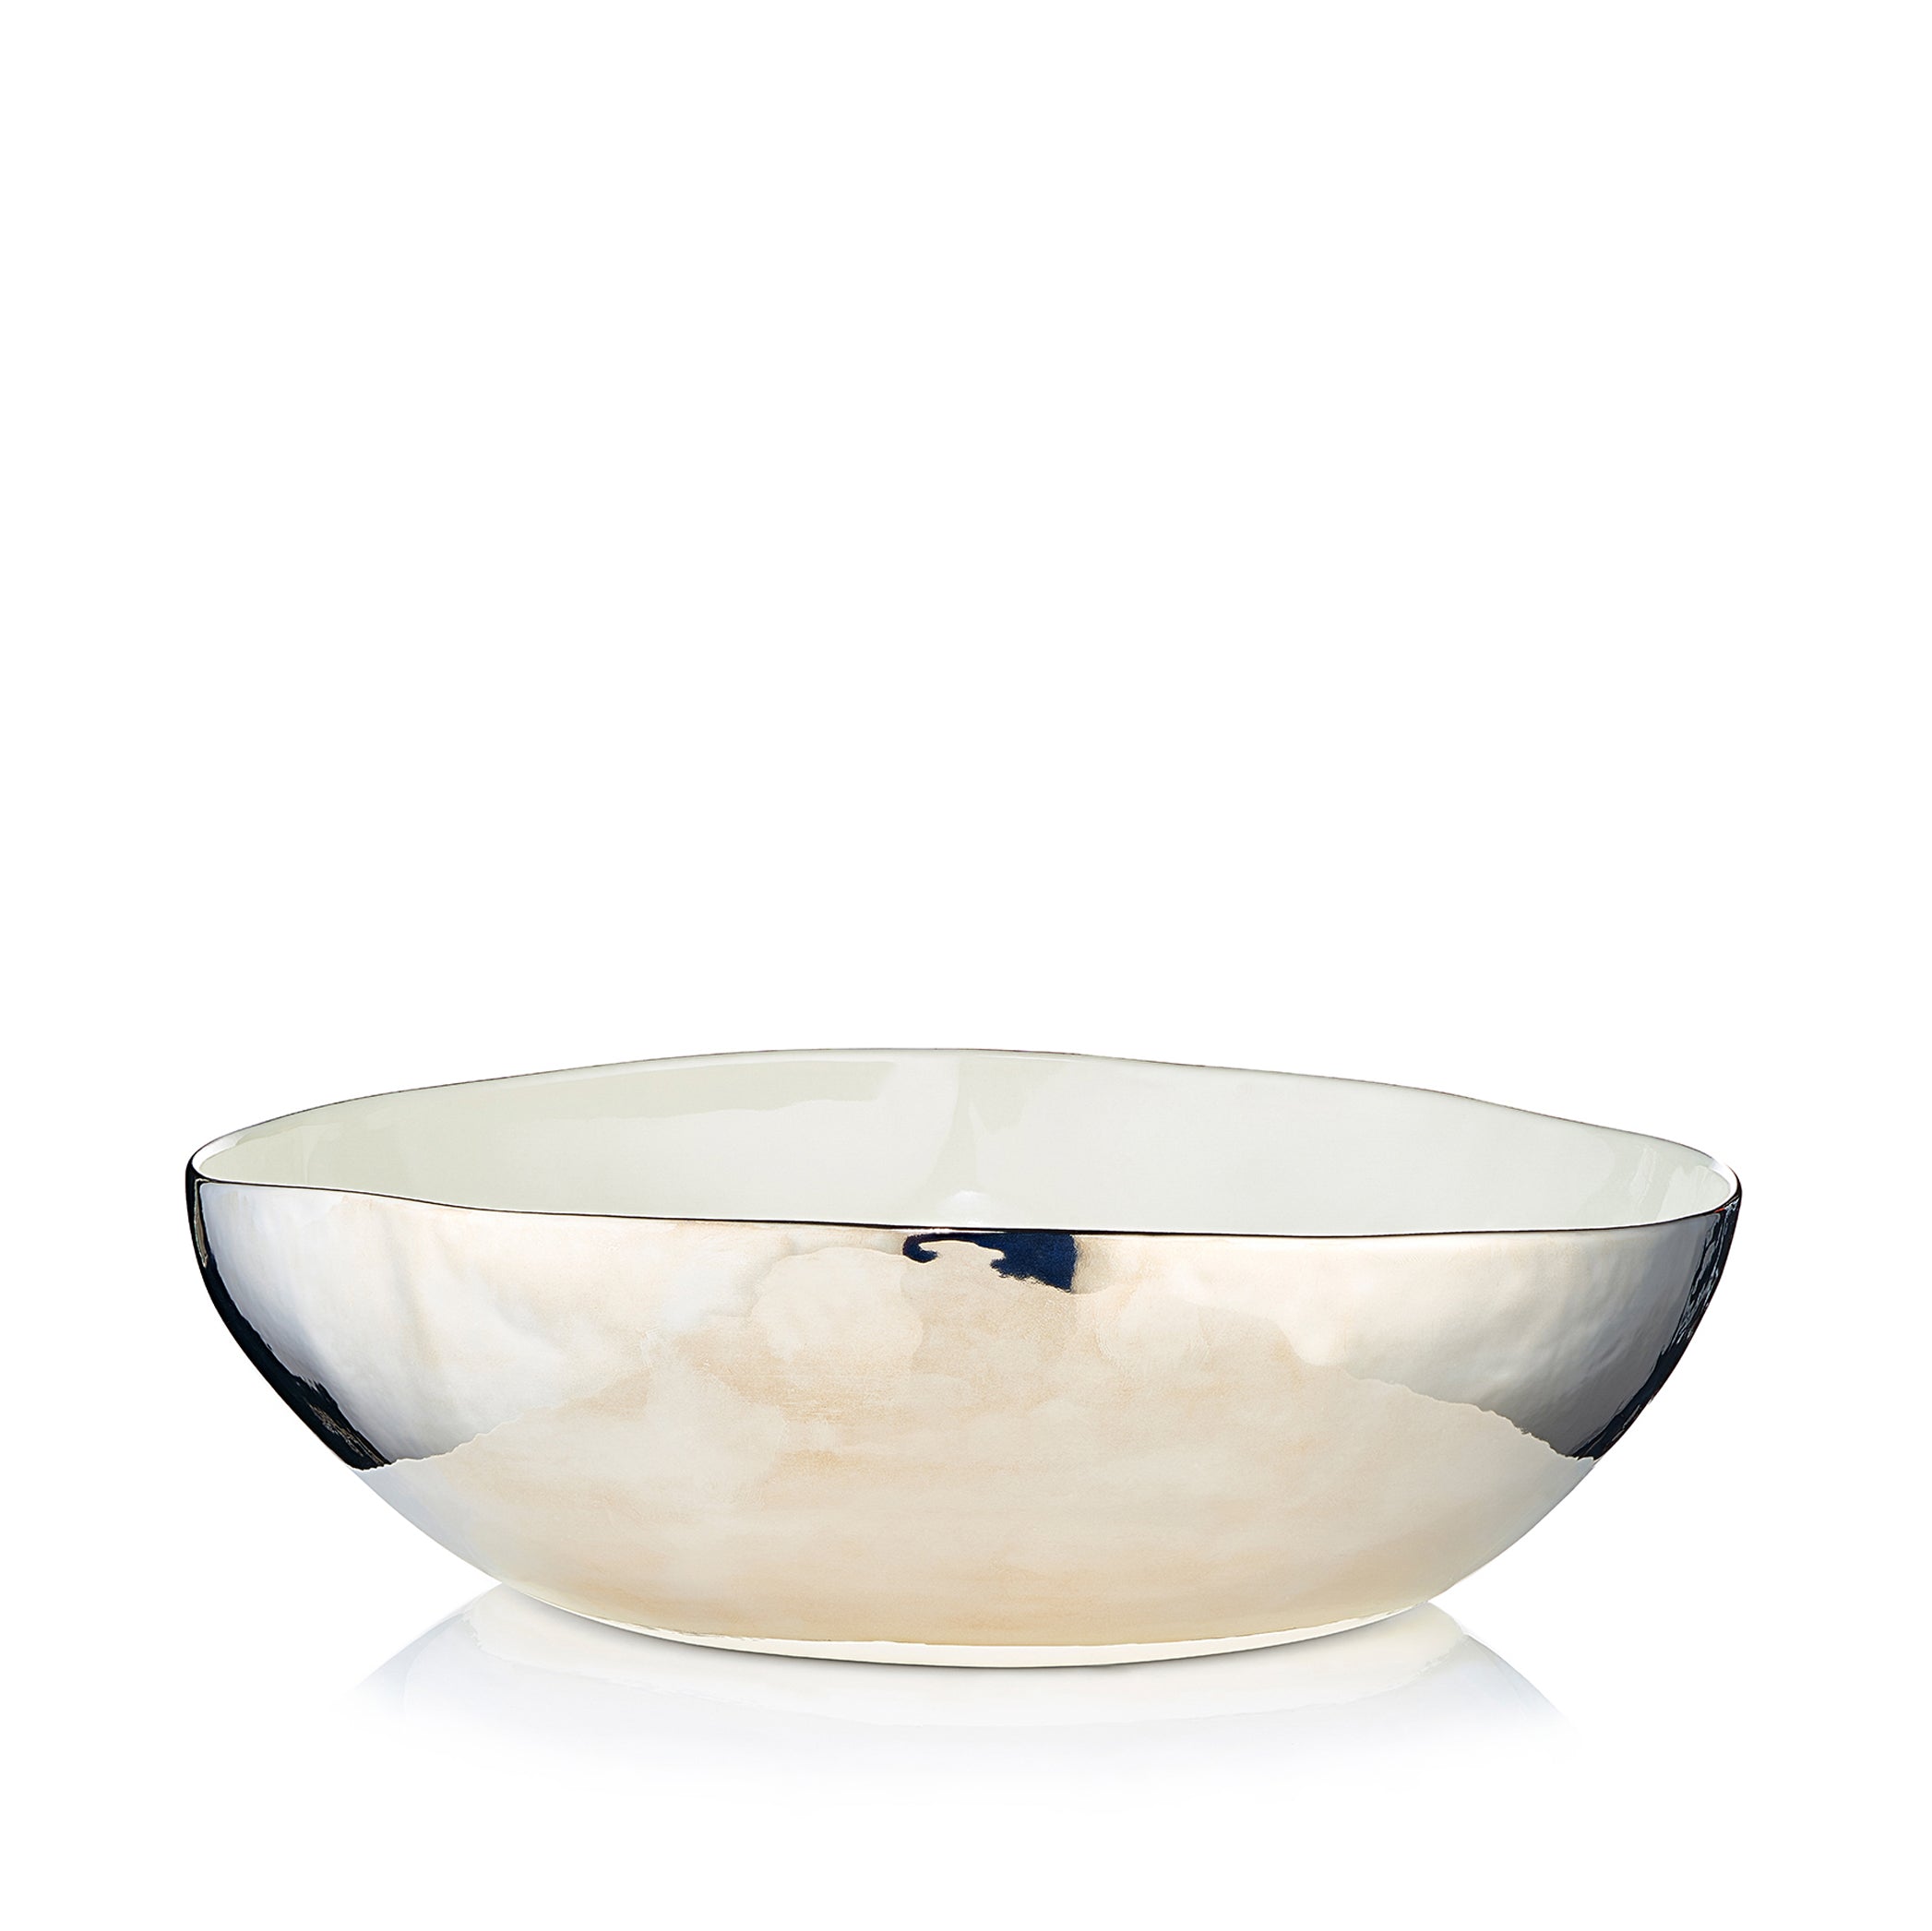 Handmade Round Ceramic Salad Serving Bowl in Silver Exterior Glaze, 30cm